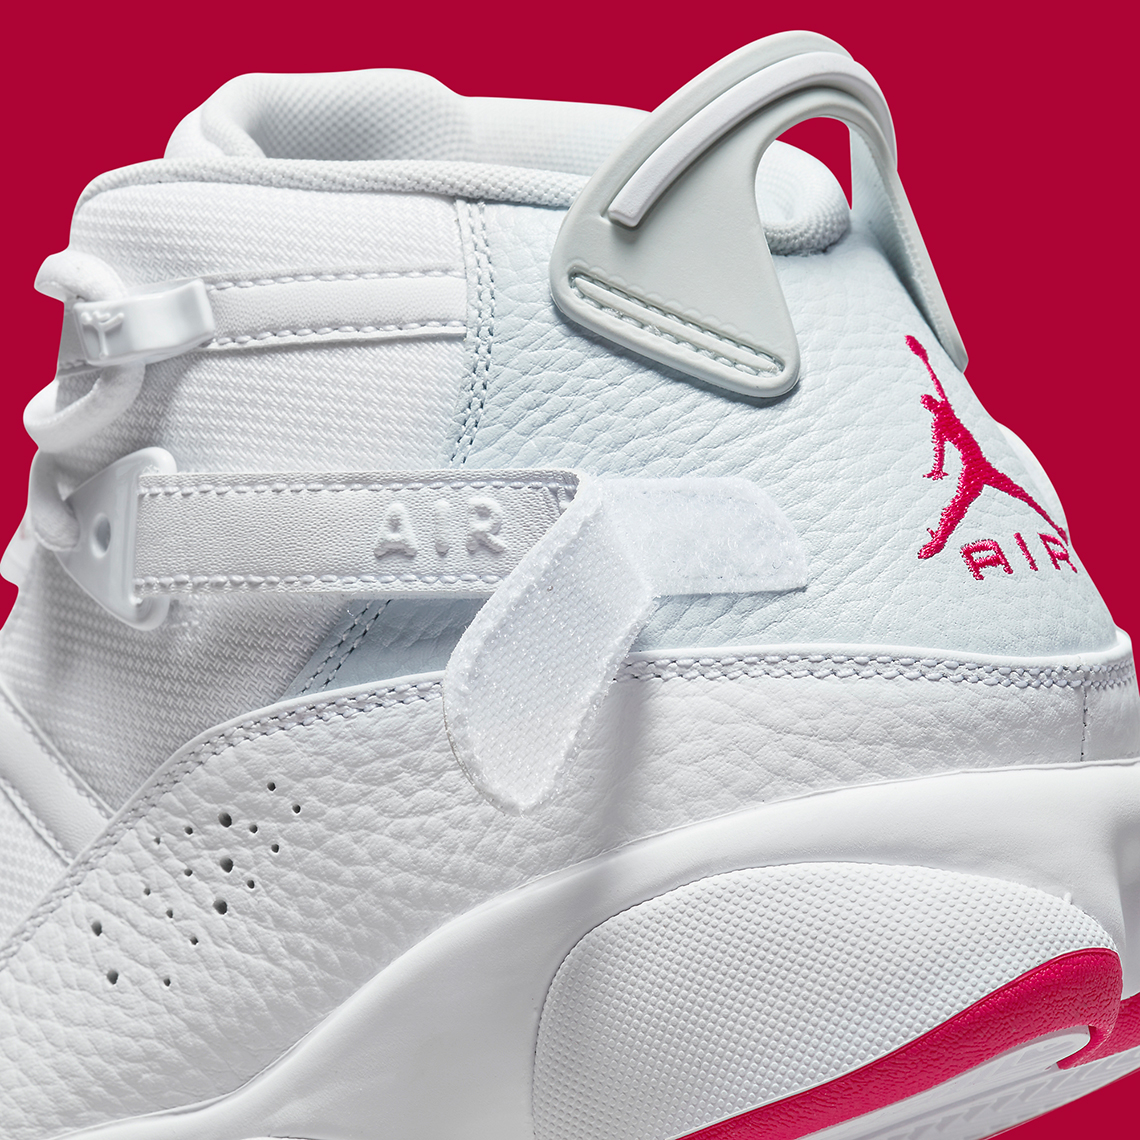 Jordan 6 Rings White Red 322992-116 | SneakerNews.com